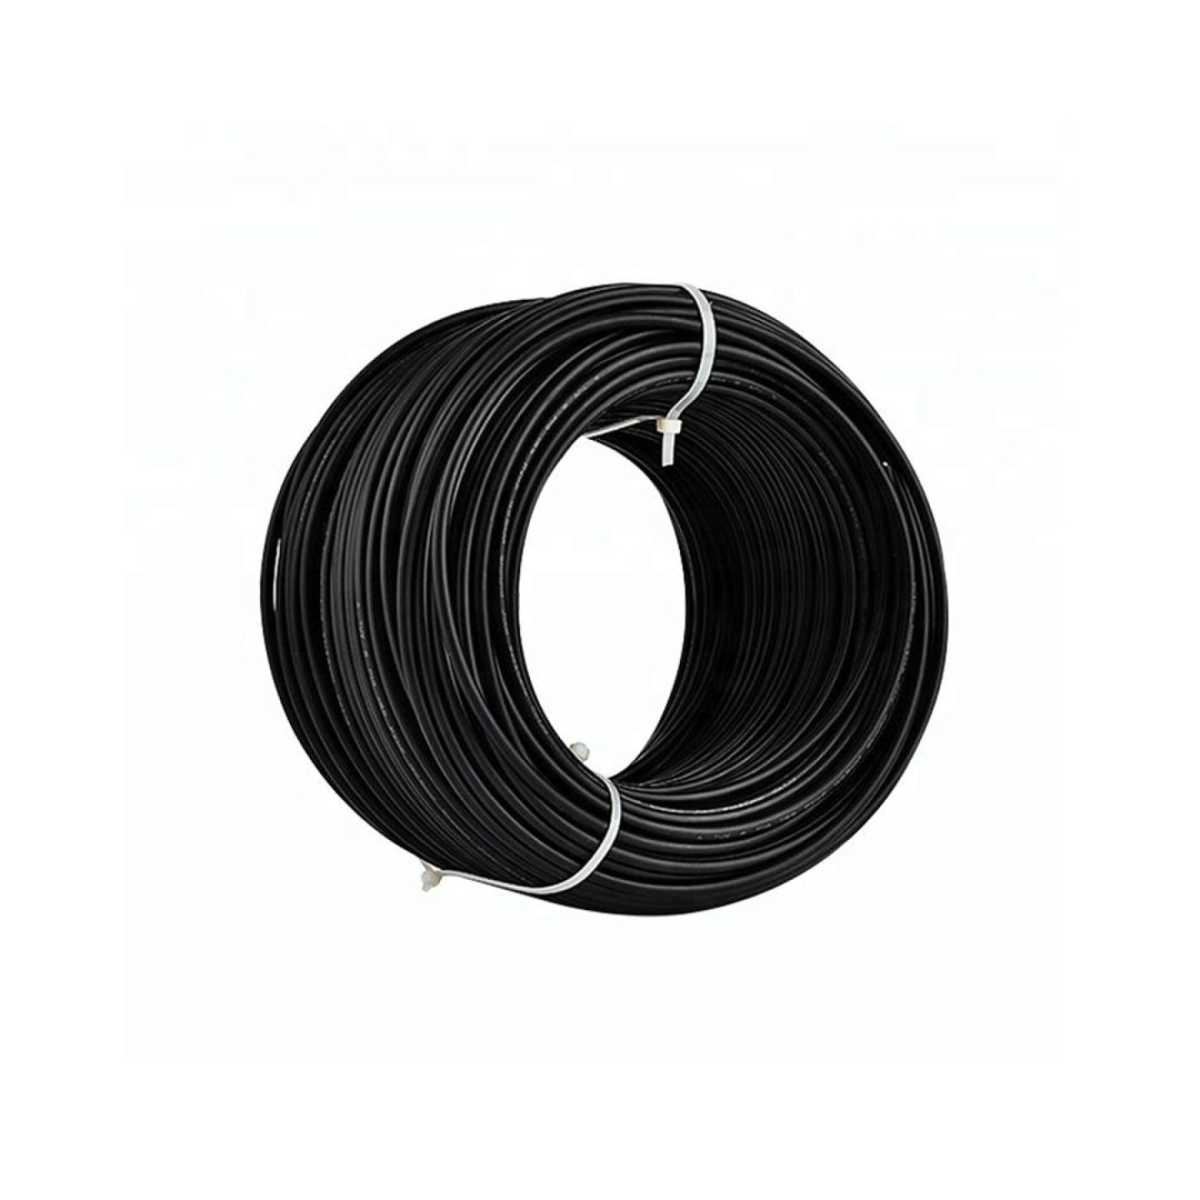 TommaTech 10.0mm Solar Cable PVI1-F Black